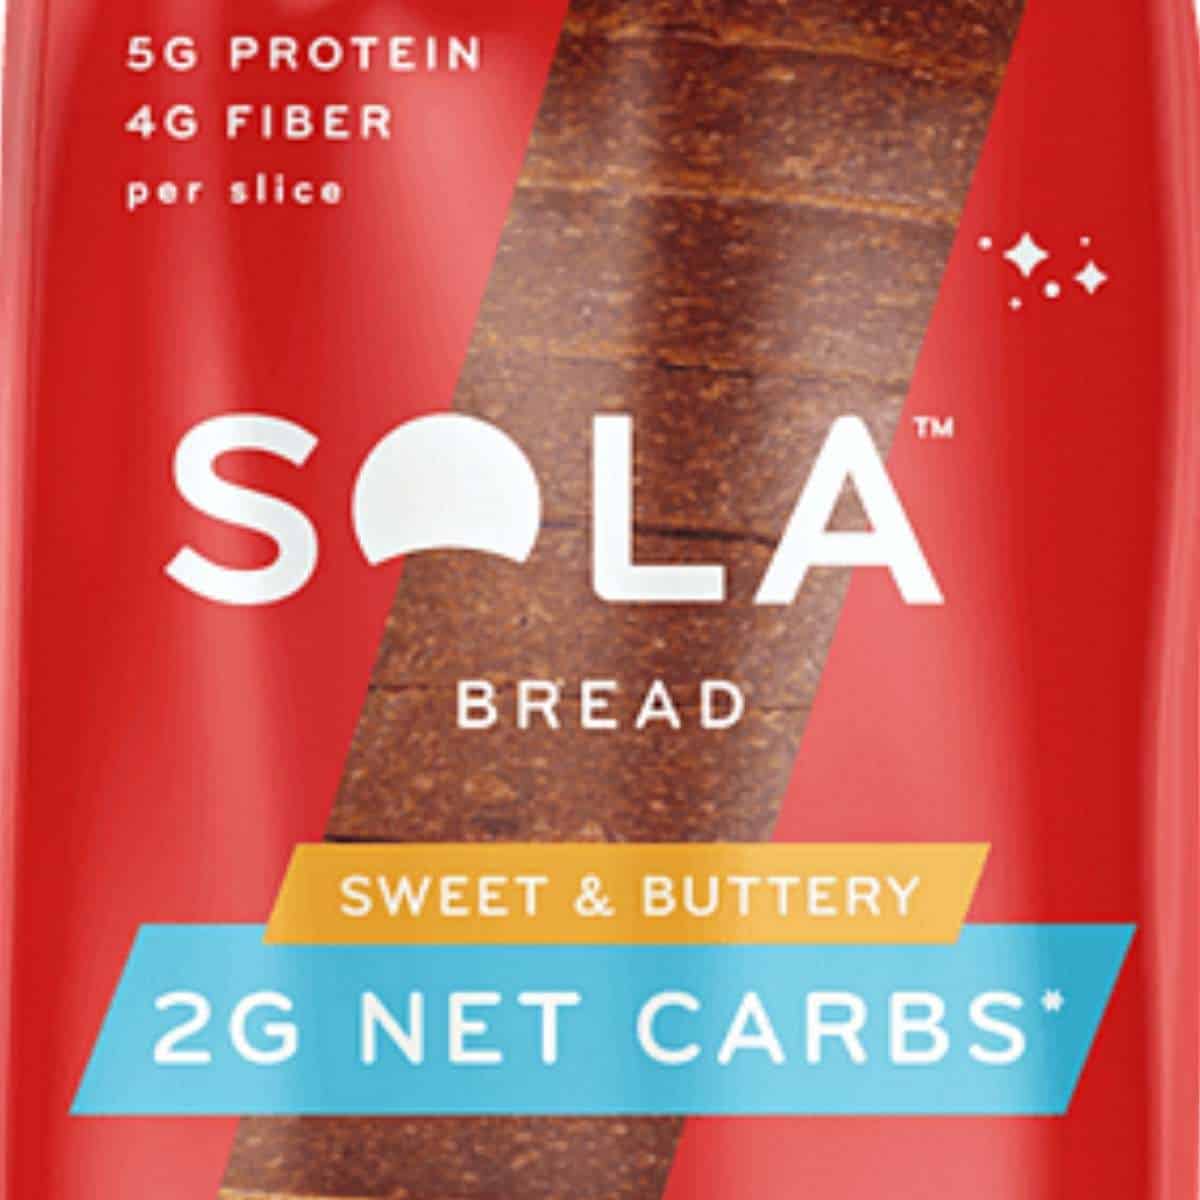 sola bread - Does Keto Bread Taste Good?